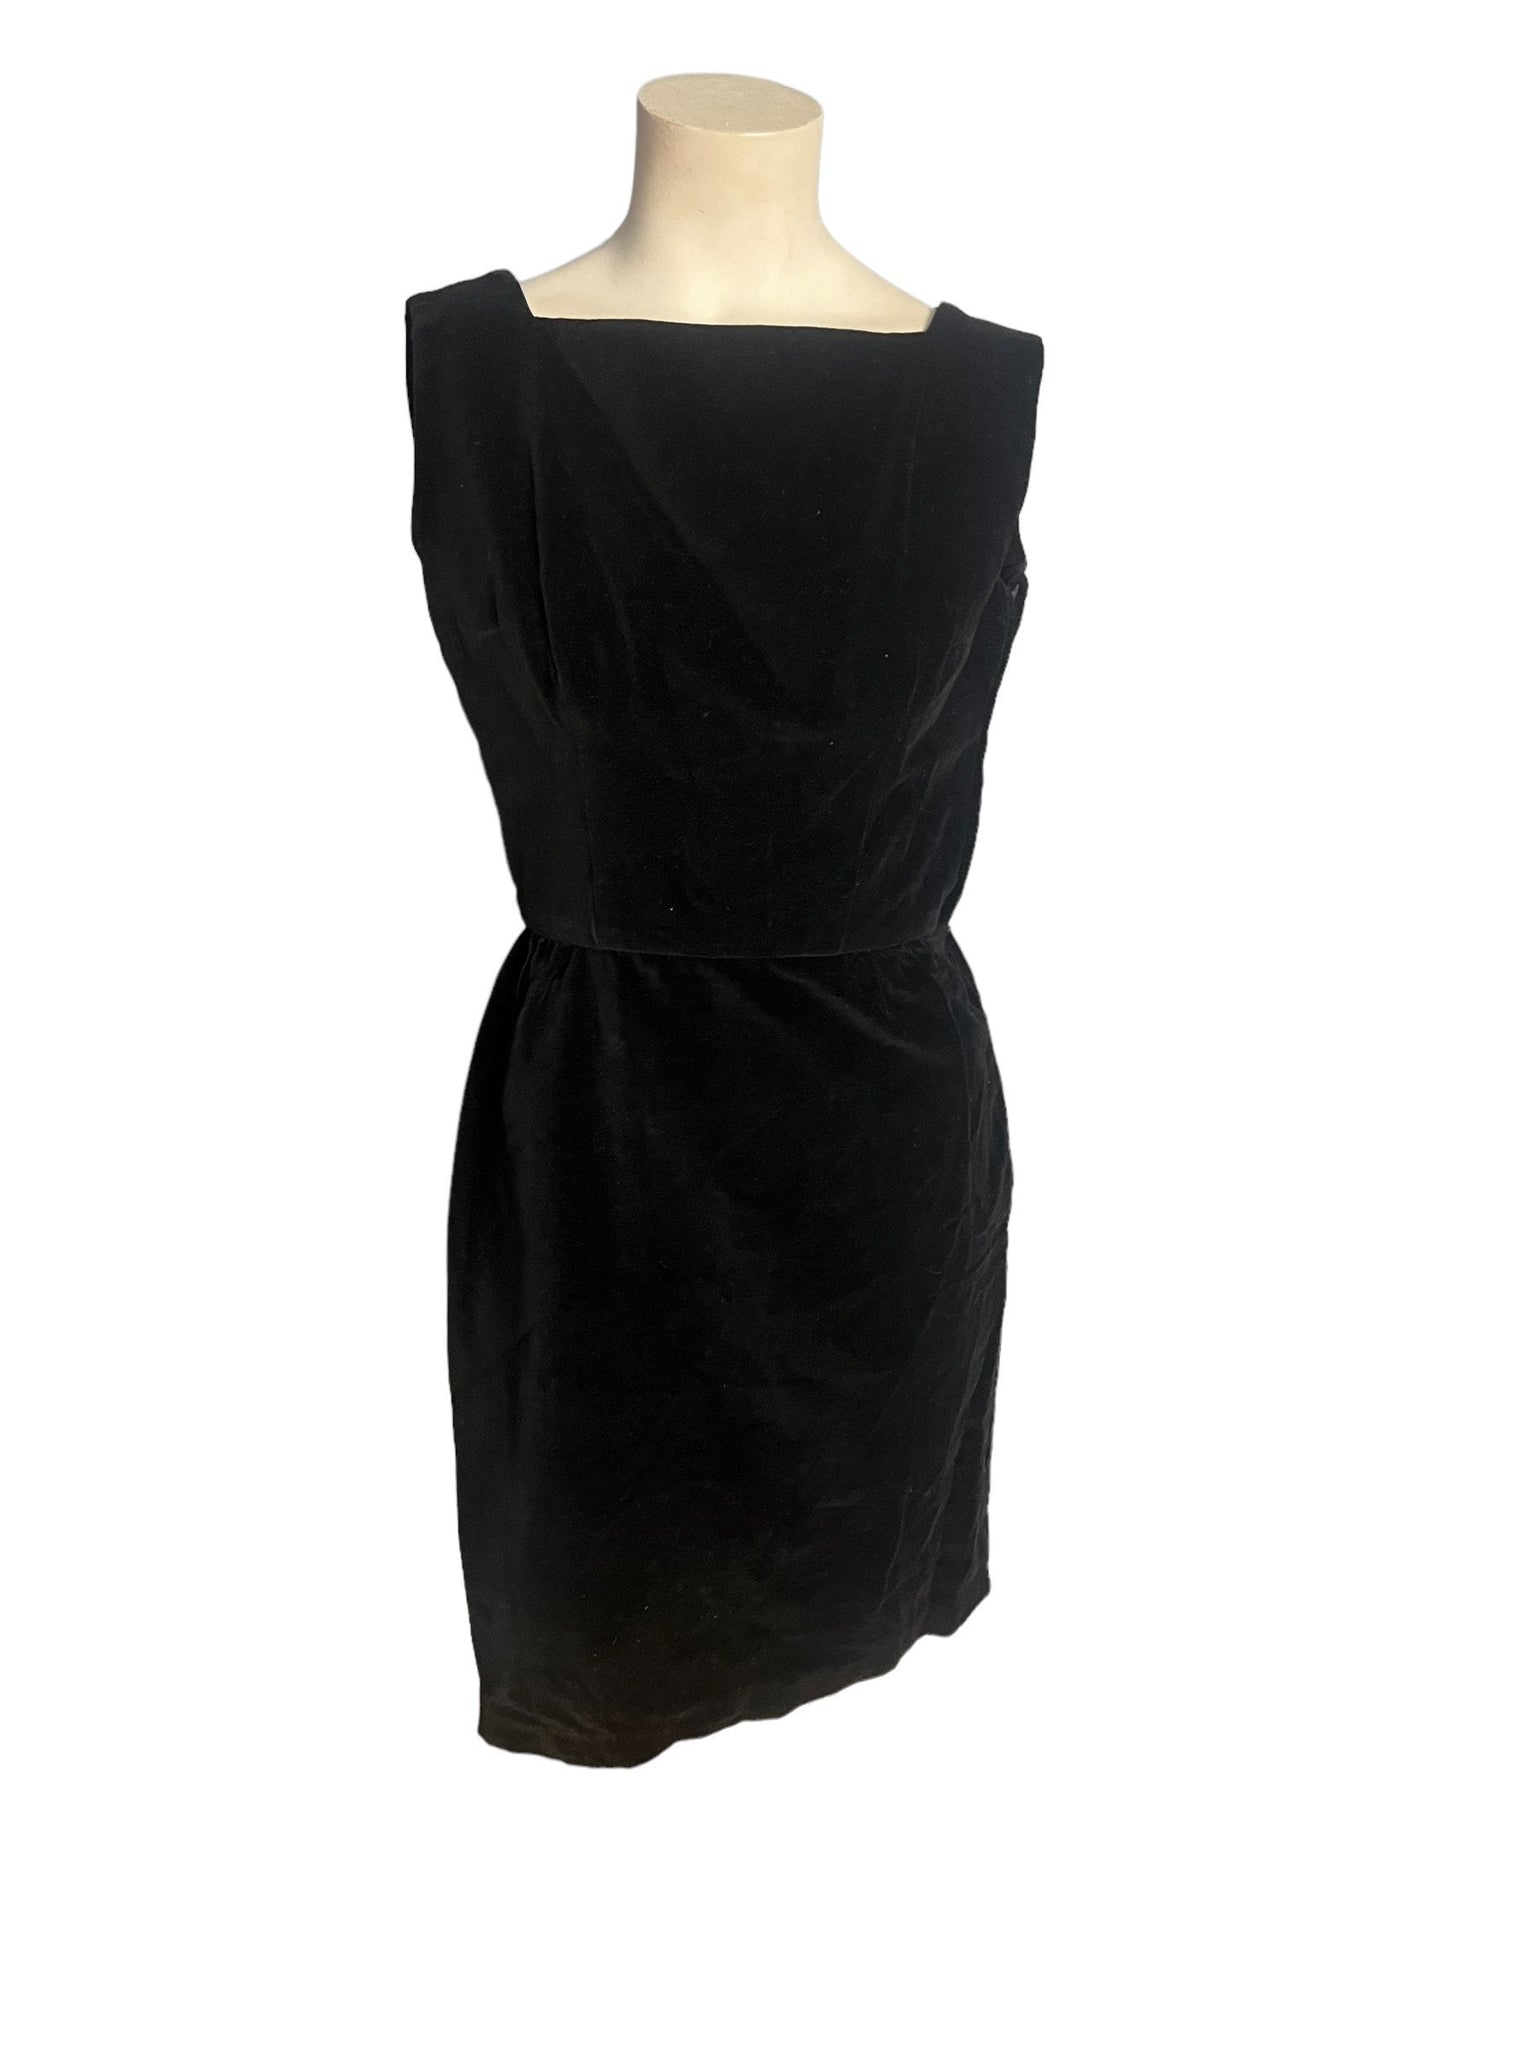 Vintage 60's black velor fitted dress S XS